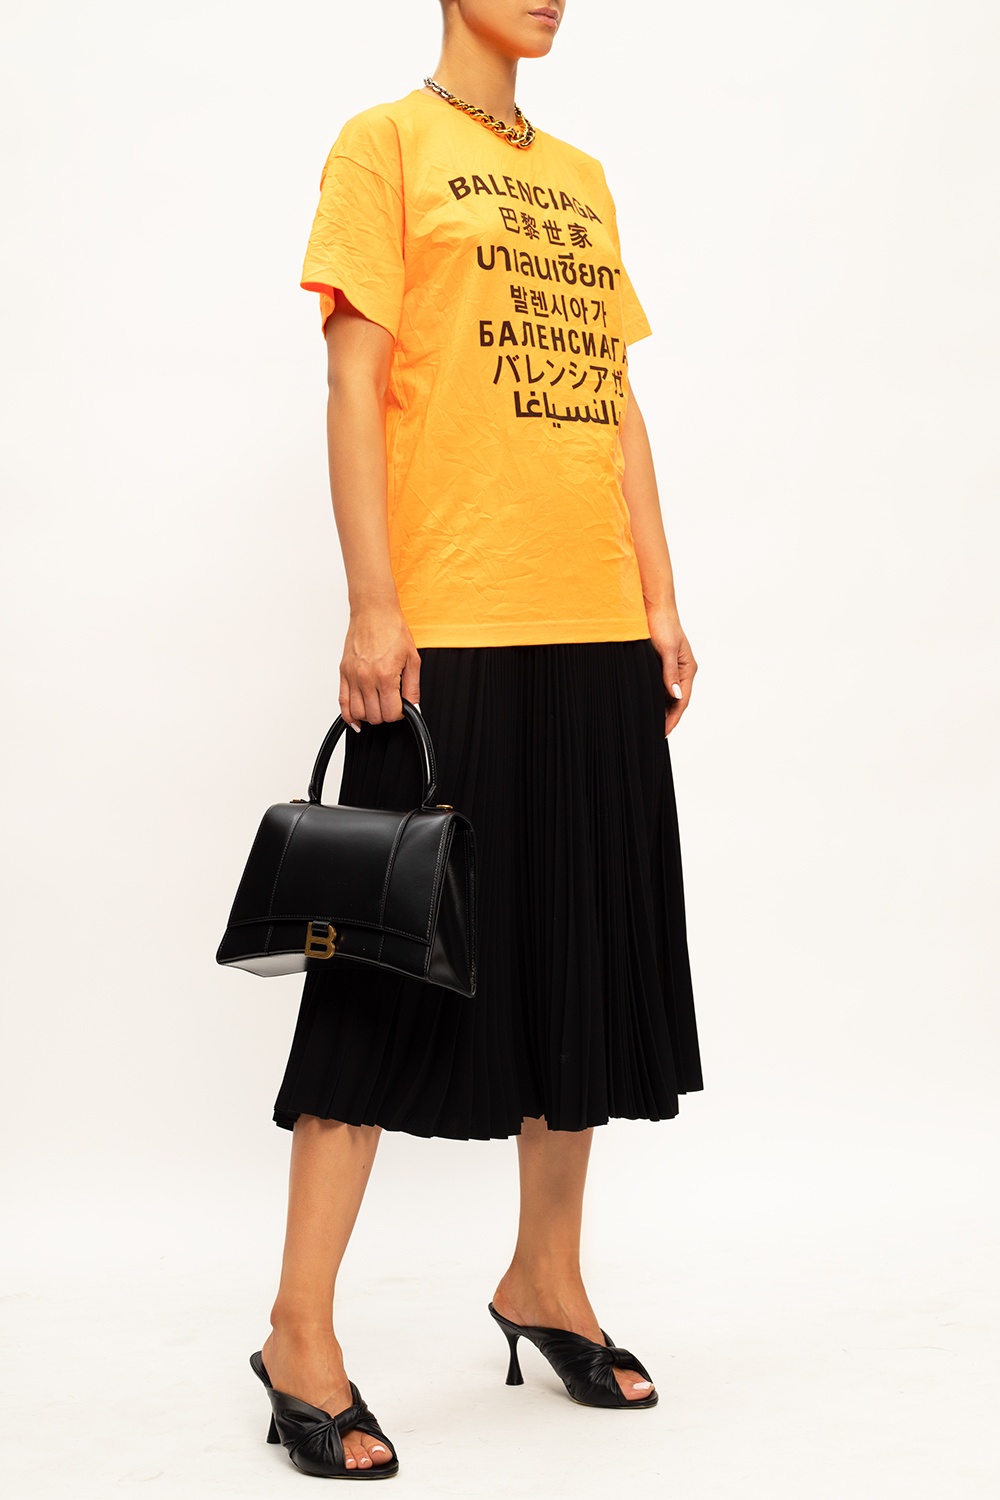 Balenciaga 7 Language Tshirt Luxury Apparel on Carousell